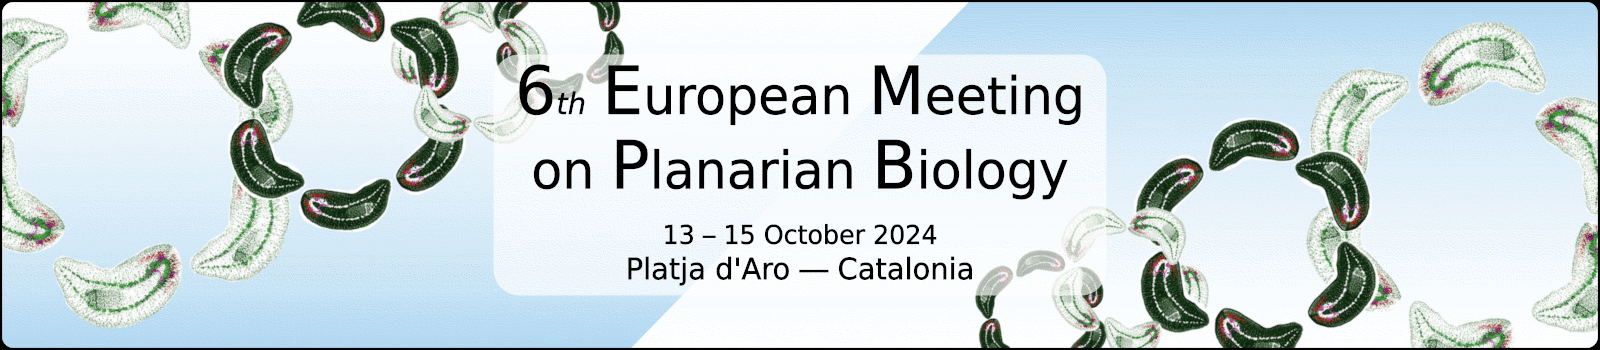 EMPB2024 - 6th European Meeting on Planarian Biology 2024